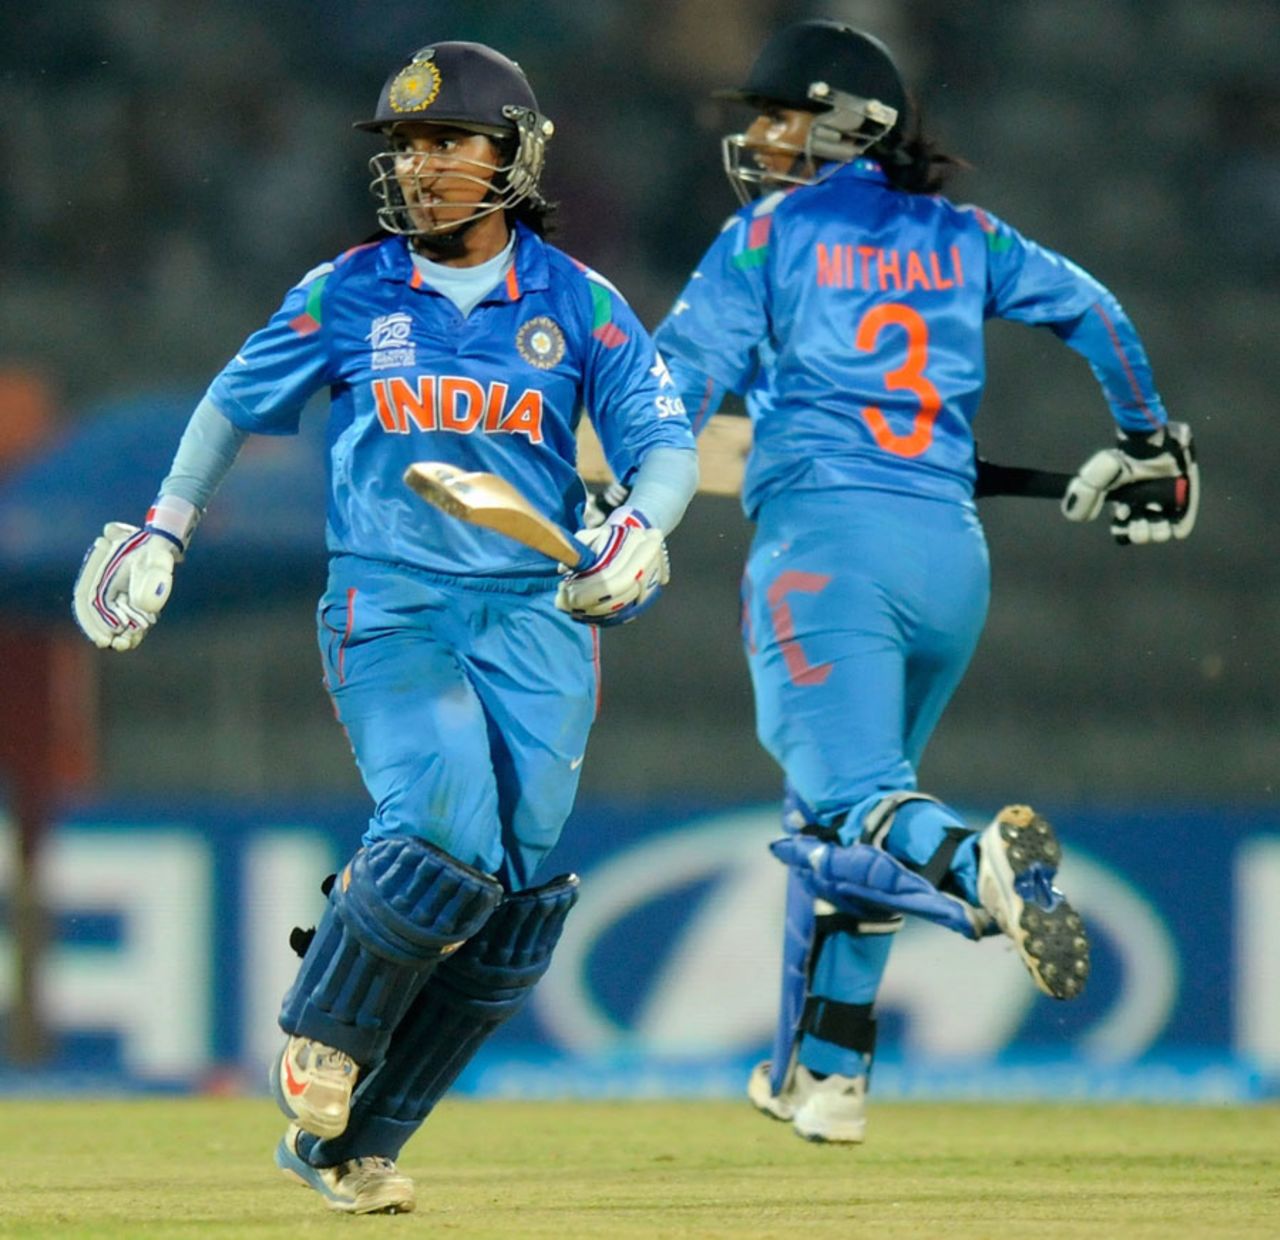 Both India openers, Poonam Raut and Mithali Raj, hit half-centuries, India v West Indies, Women's World T20, Group B, Sylhet, April 1, 2014